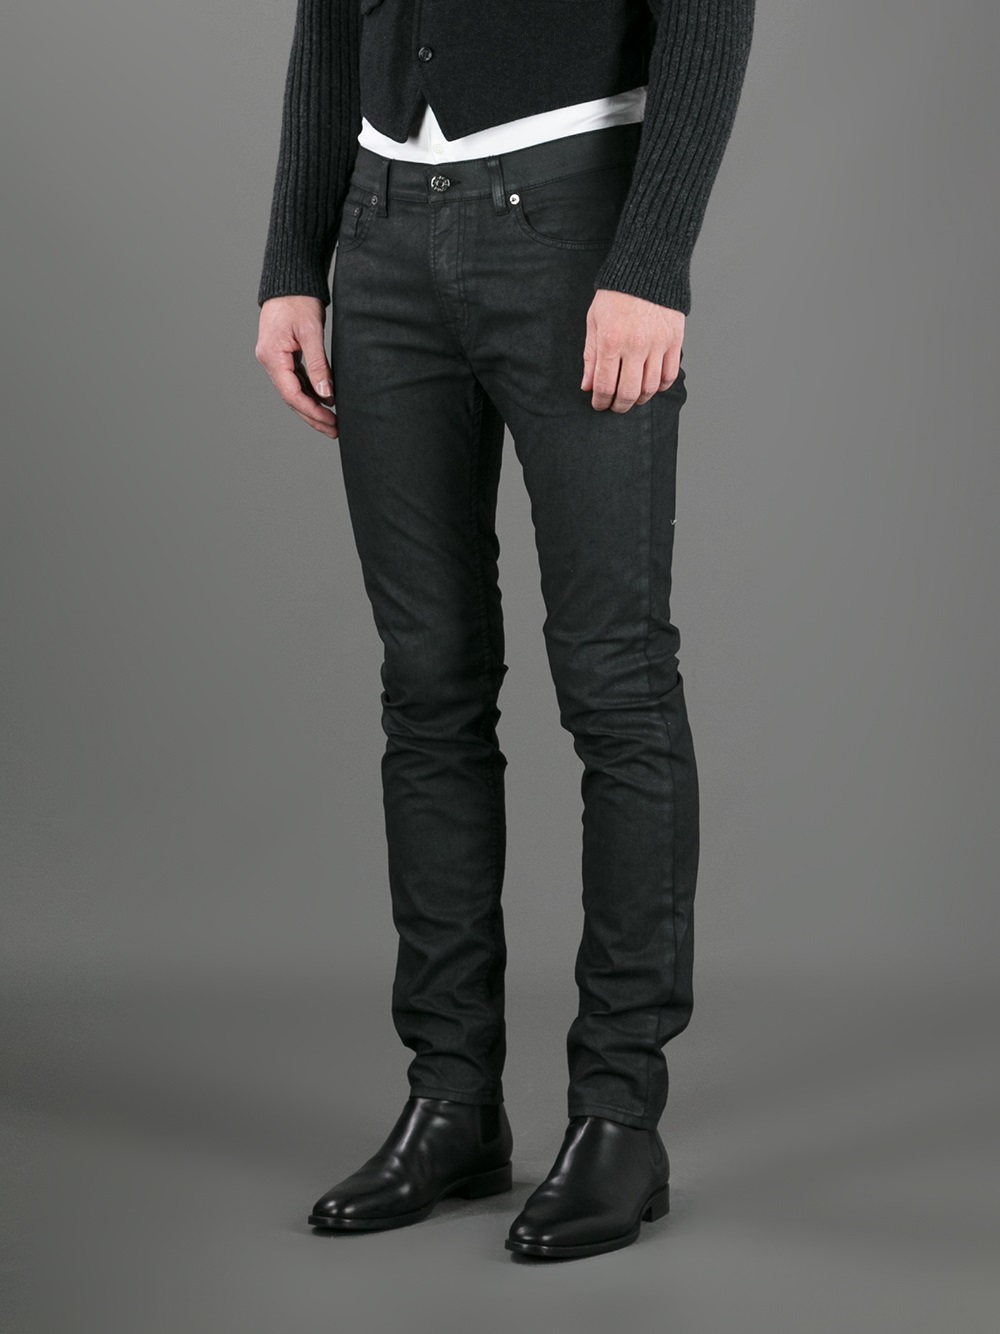 Acne Studios Ace Pleather Jean in Black for Men - Lyst